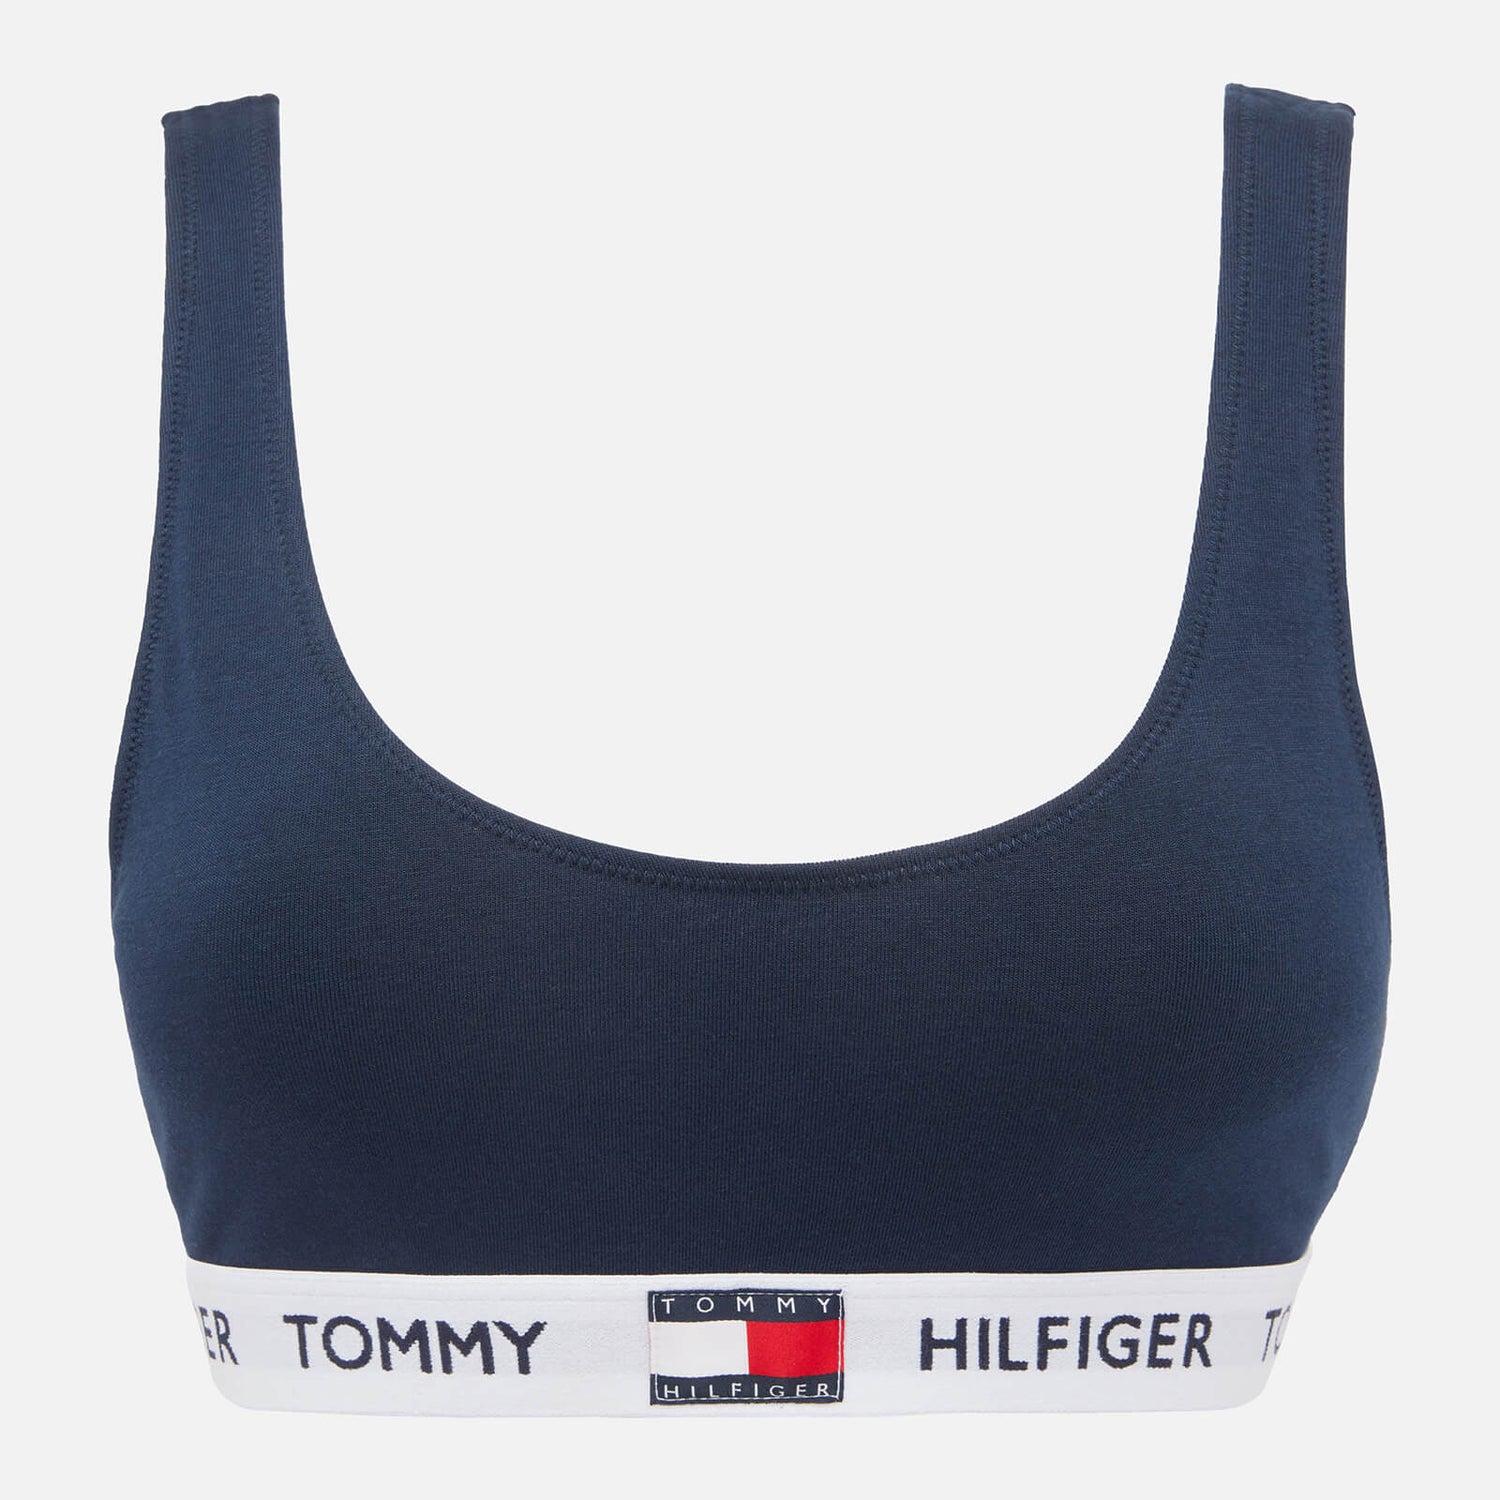 Tommy Hilfiger Women's Tommy 85 Bralette - Navy Blazer - S